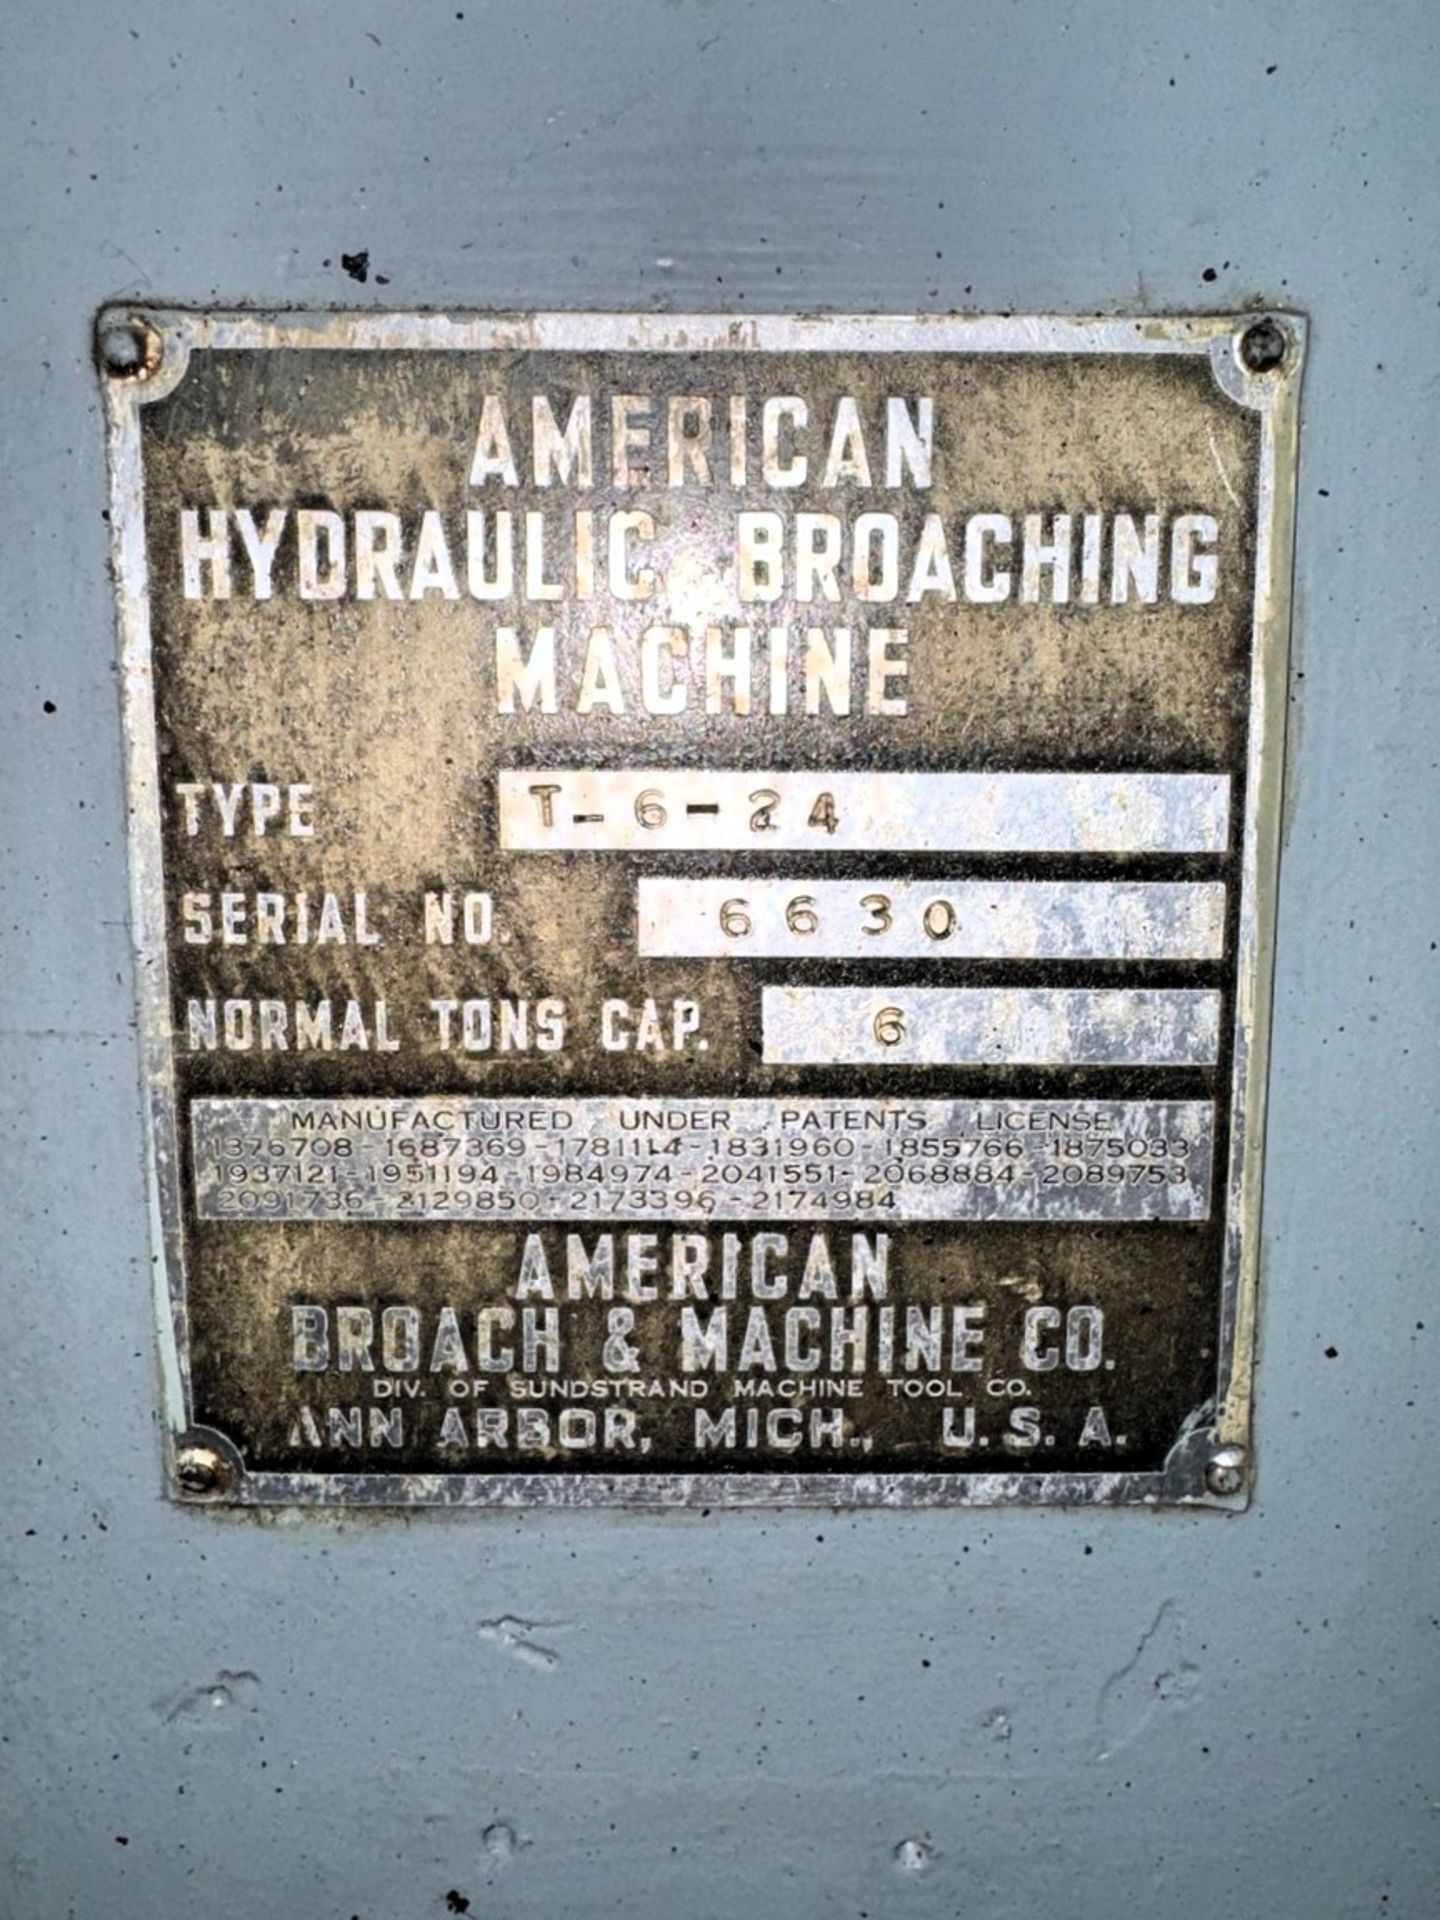 American Model T-6-24 Vertical Hydraulic Broach - Bild 6 aus 6